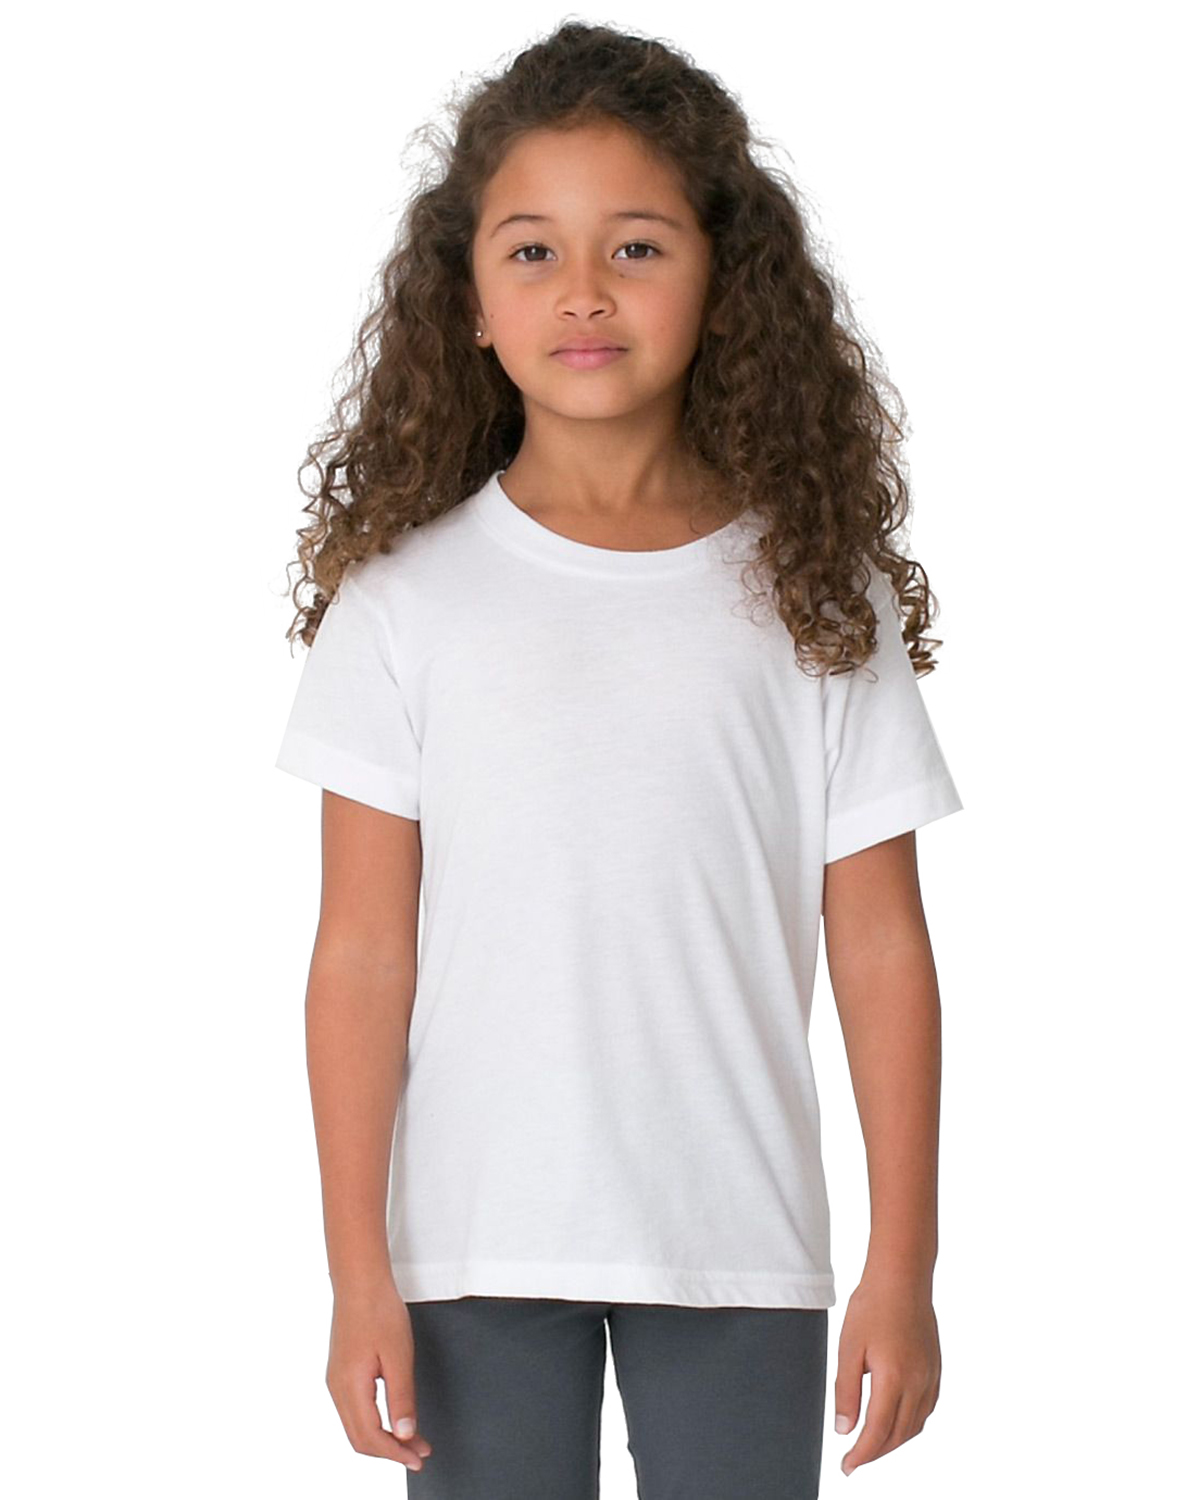 American Apparel Toddler Fine Jersey Short-Sleeve T-Shirt